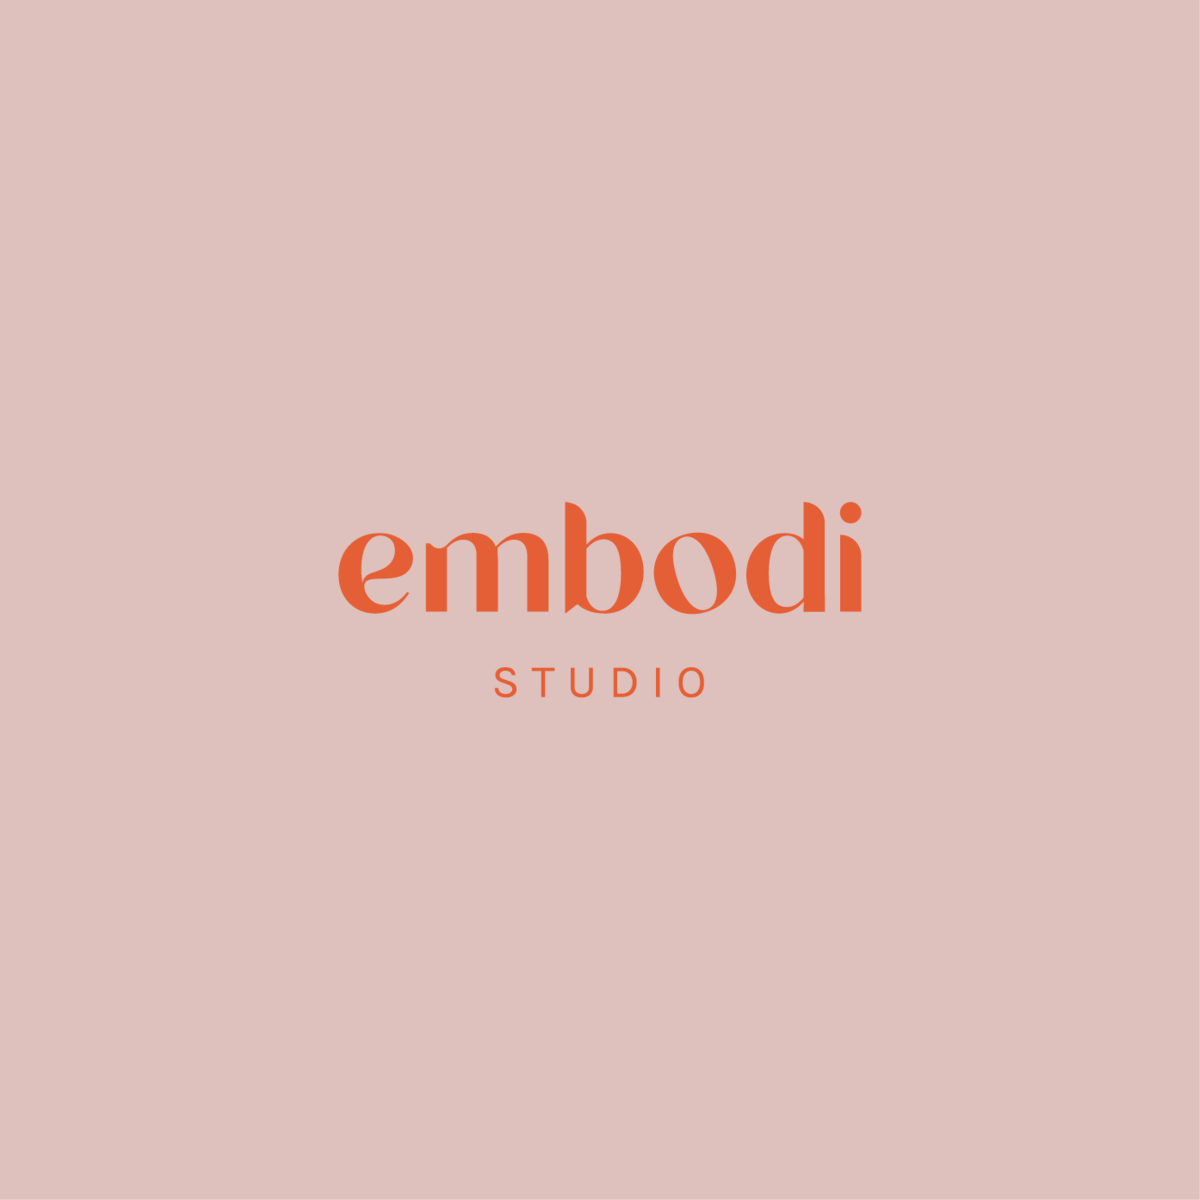 embodi_portfolio-09